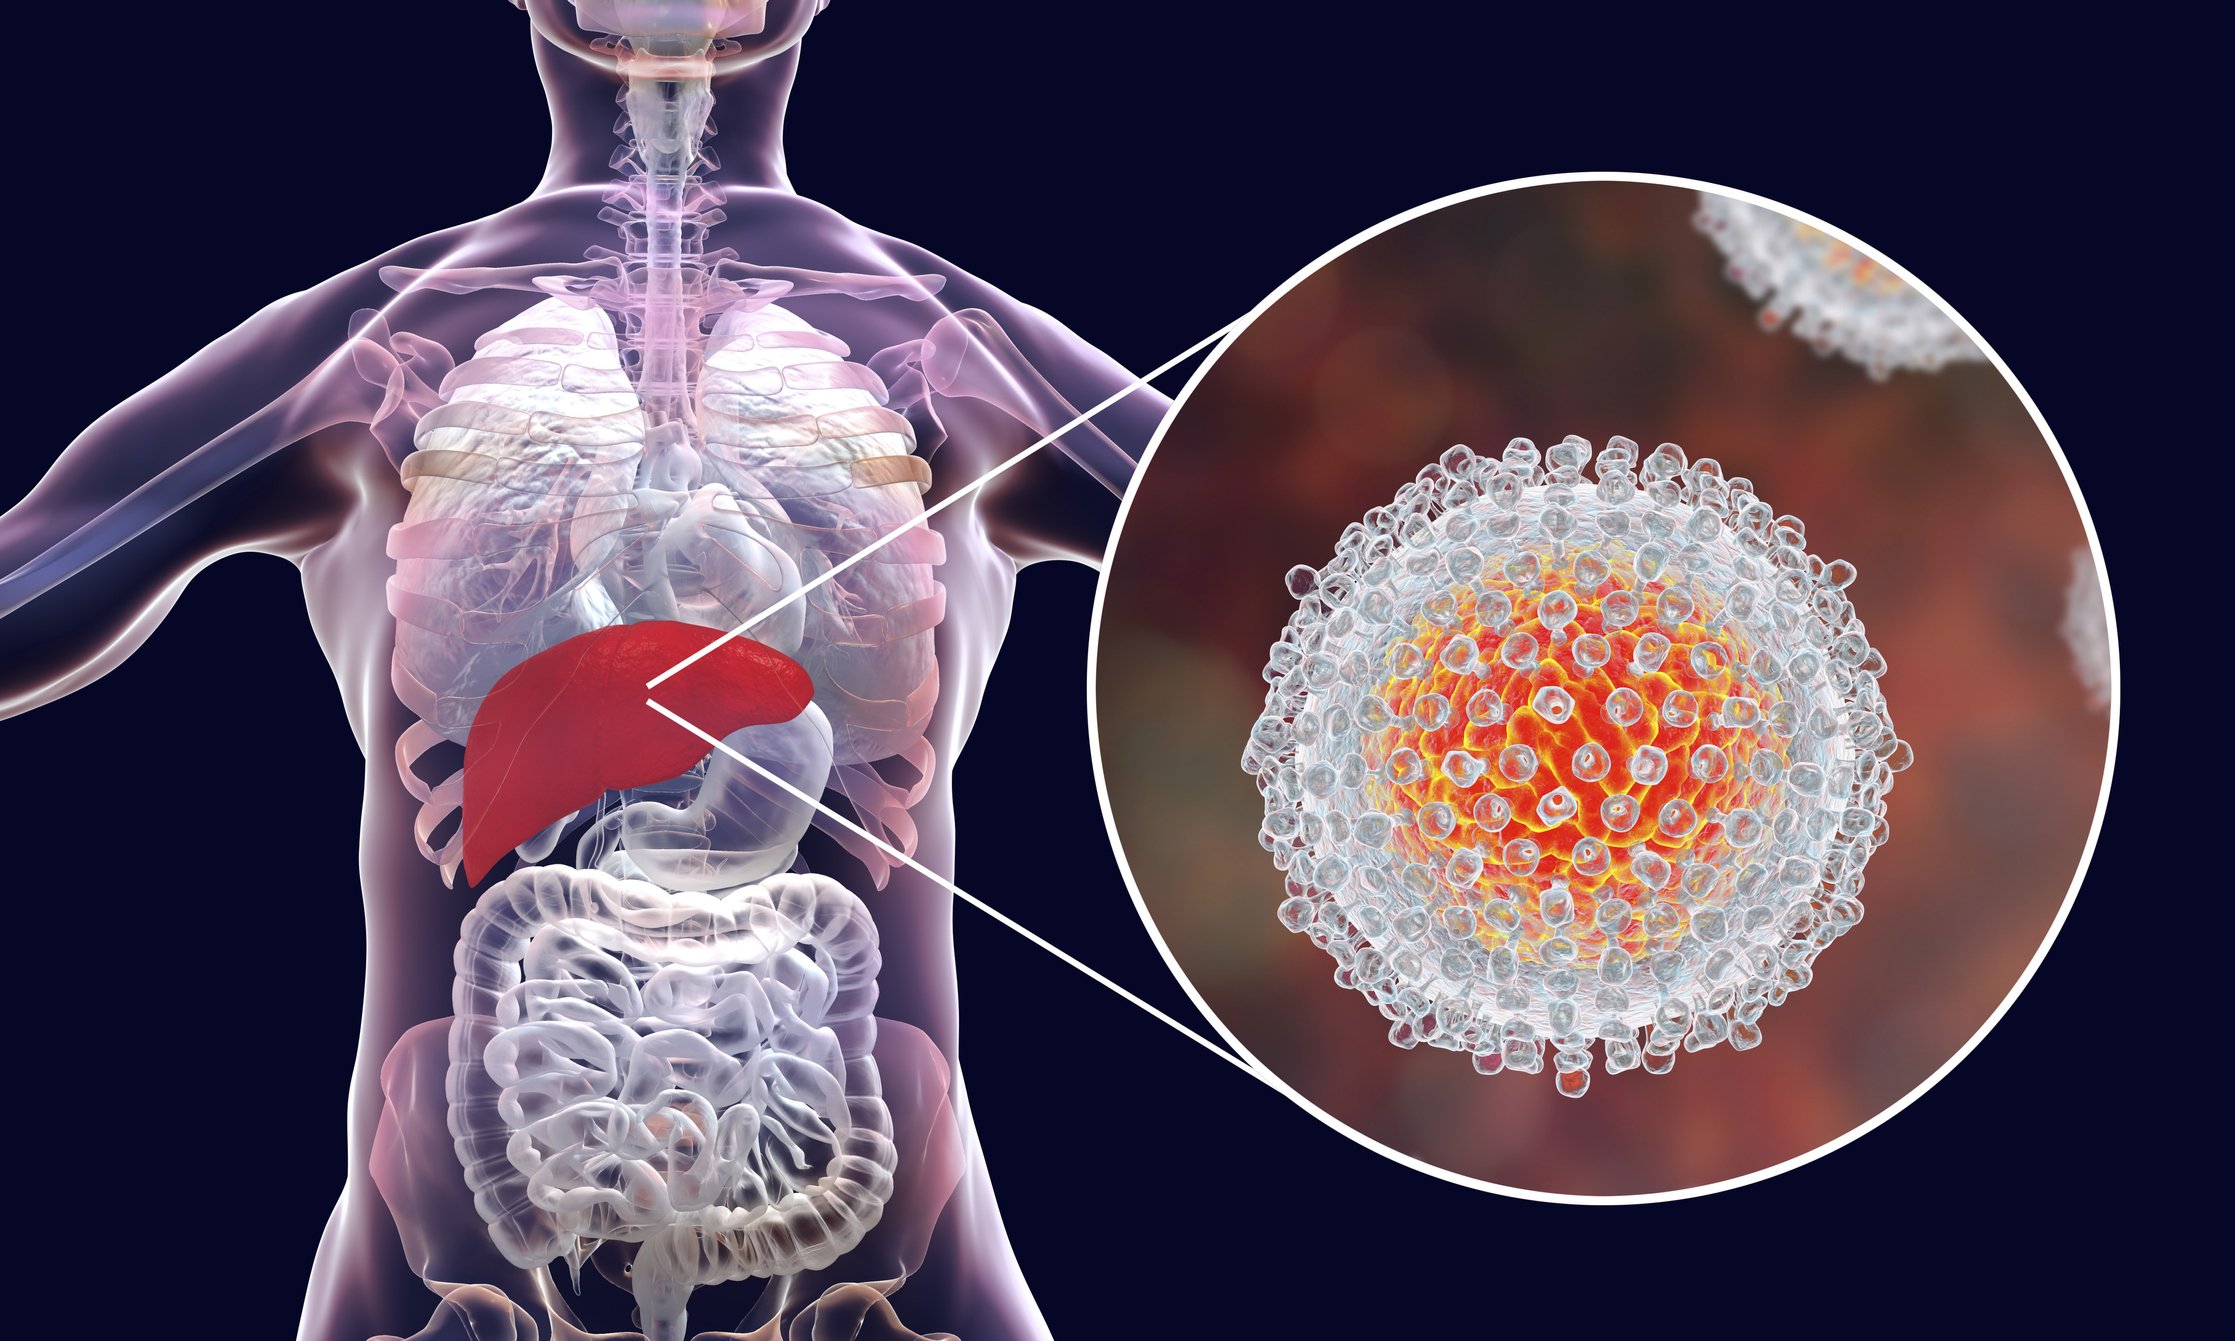 The Viral Time Bomb: Hepatitis C